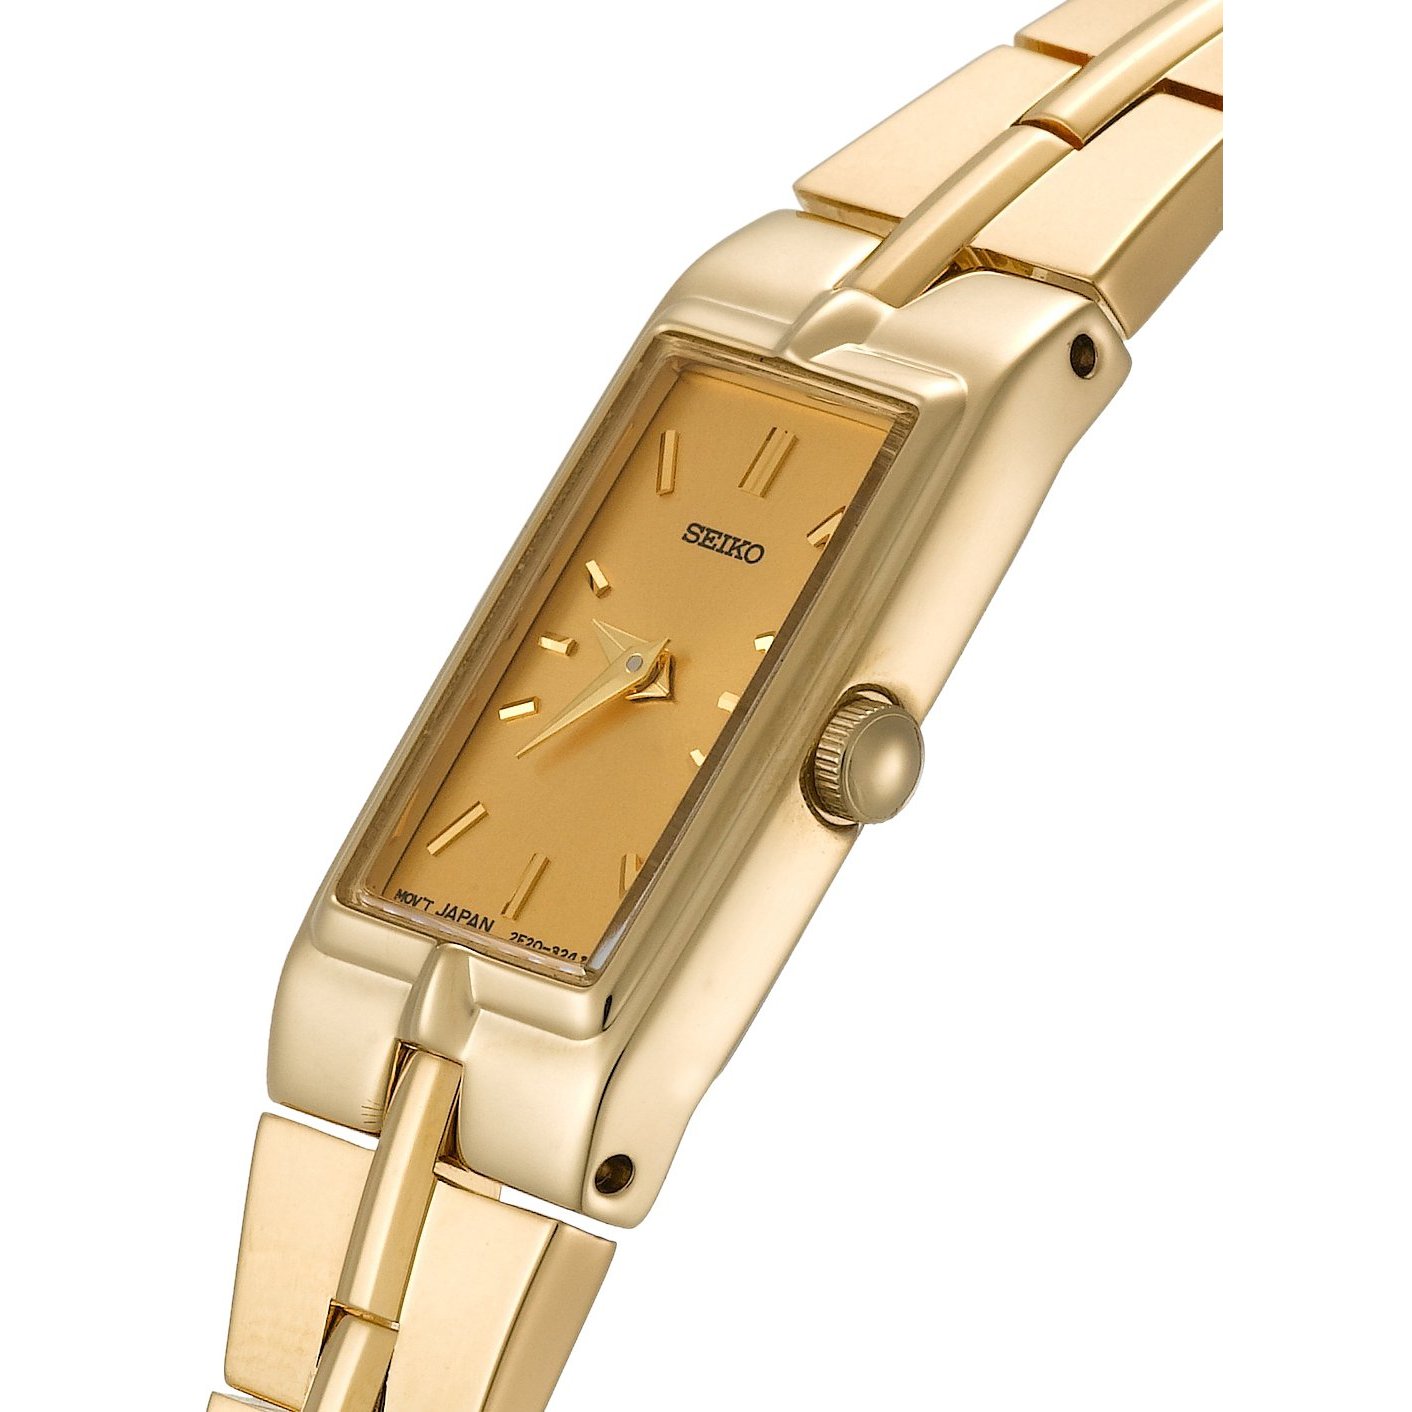 SZZC44 Seiko Women's Gold-Tone Dress Watch